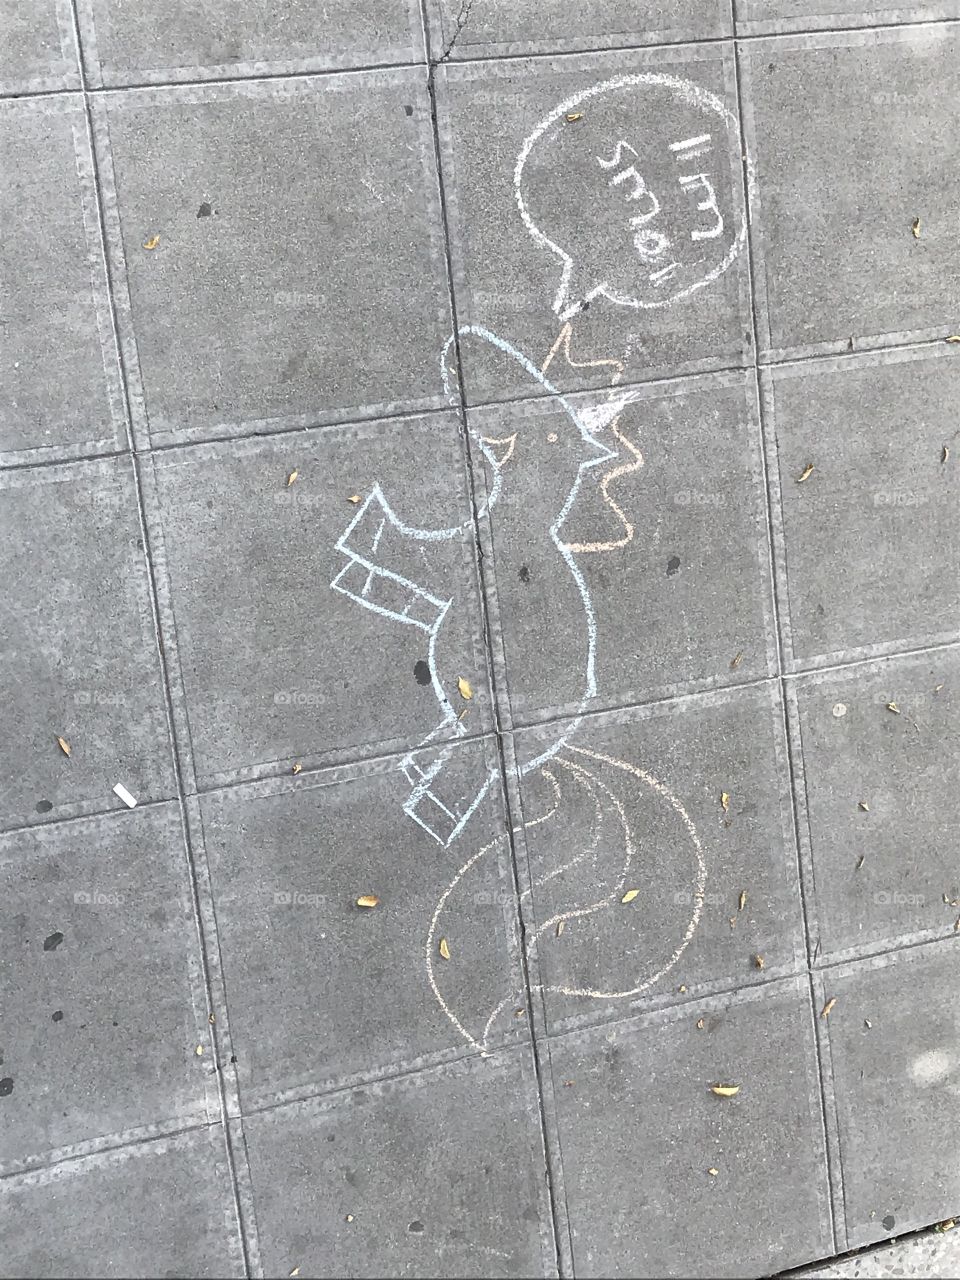 Unicorn art on the sidewalk of Seattle, adding a bit of unicorn joy